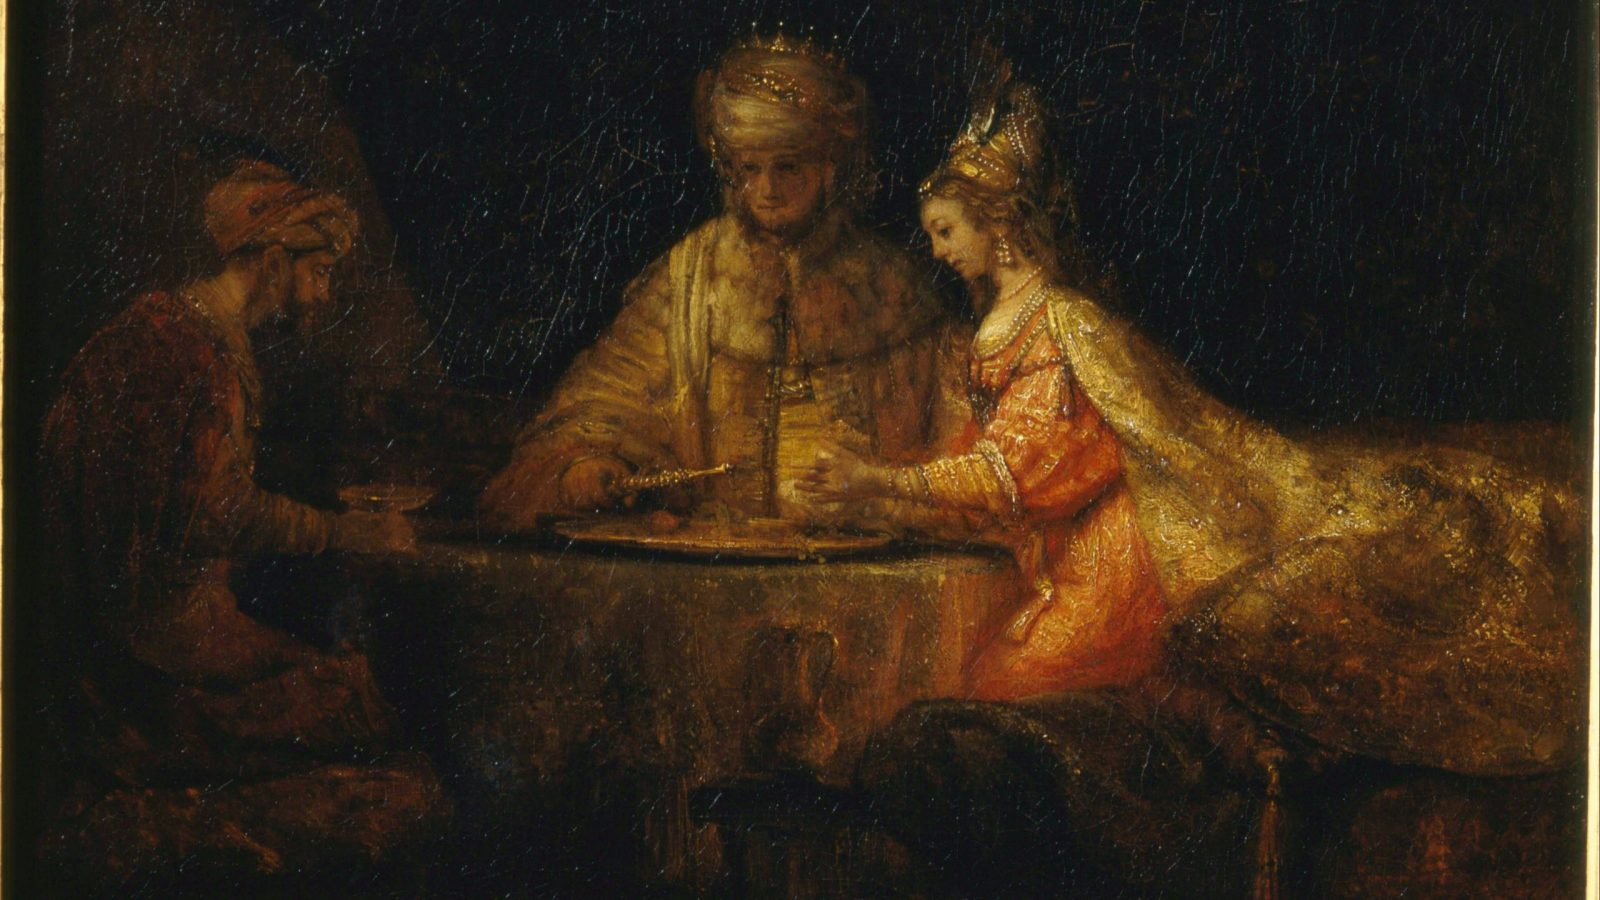 haman, Esther, and King Ahasuerus